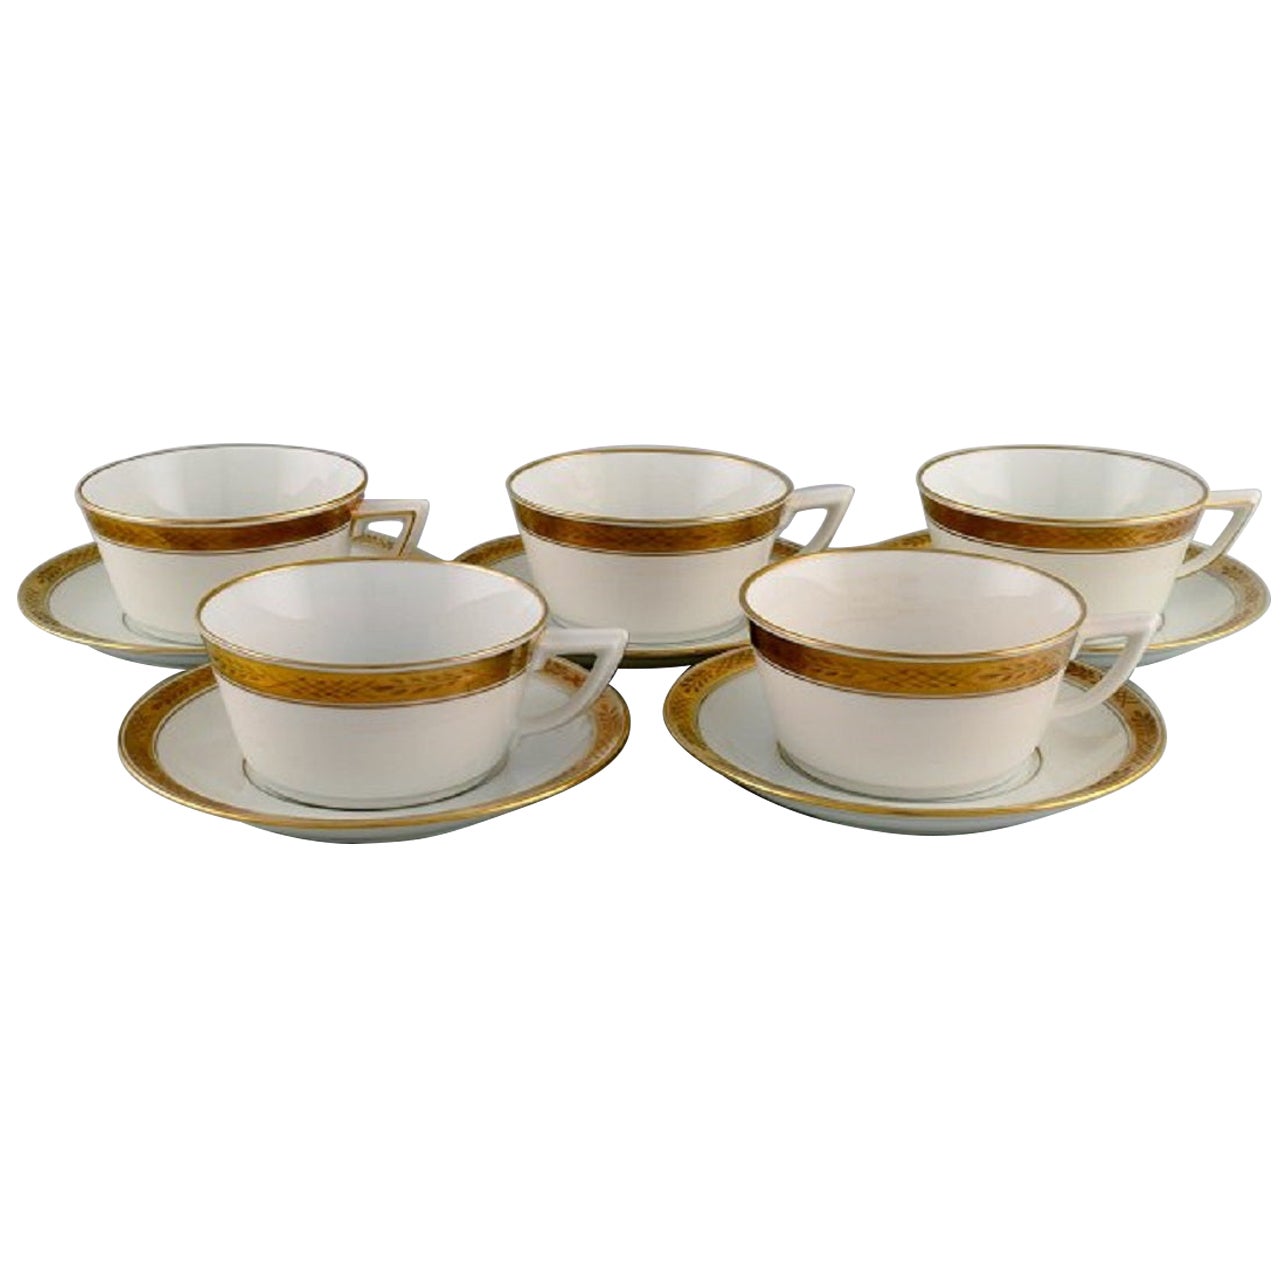 Royal Copenhagen Service No. 607, Five Teacups with Saucers